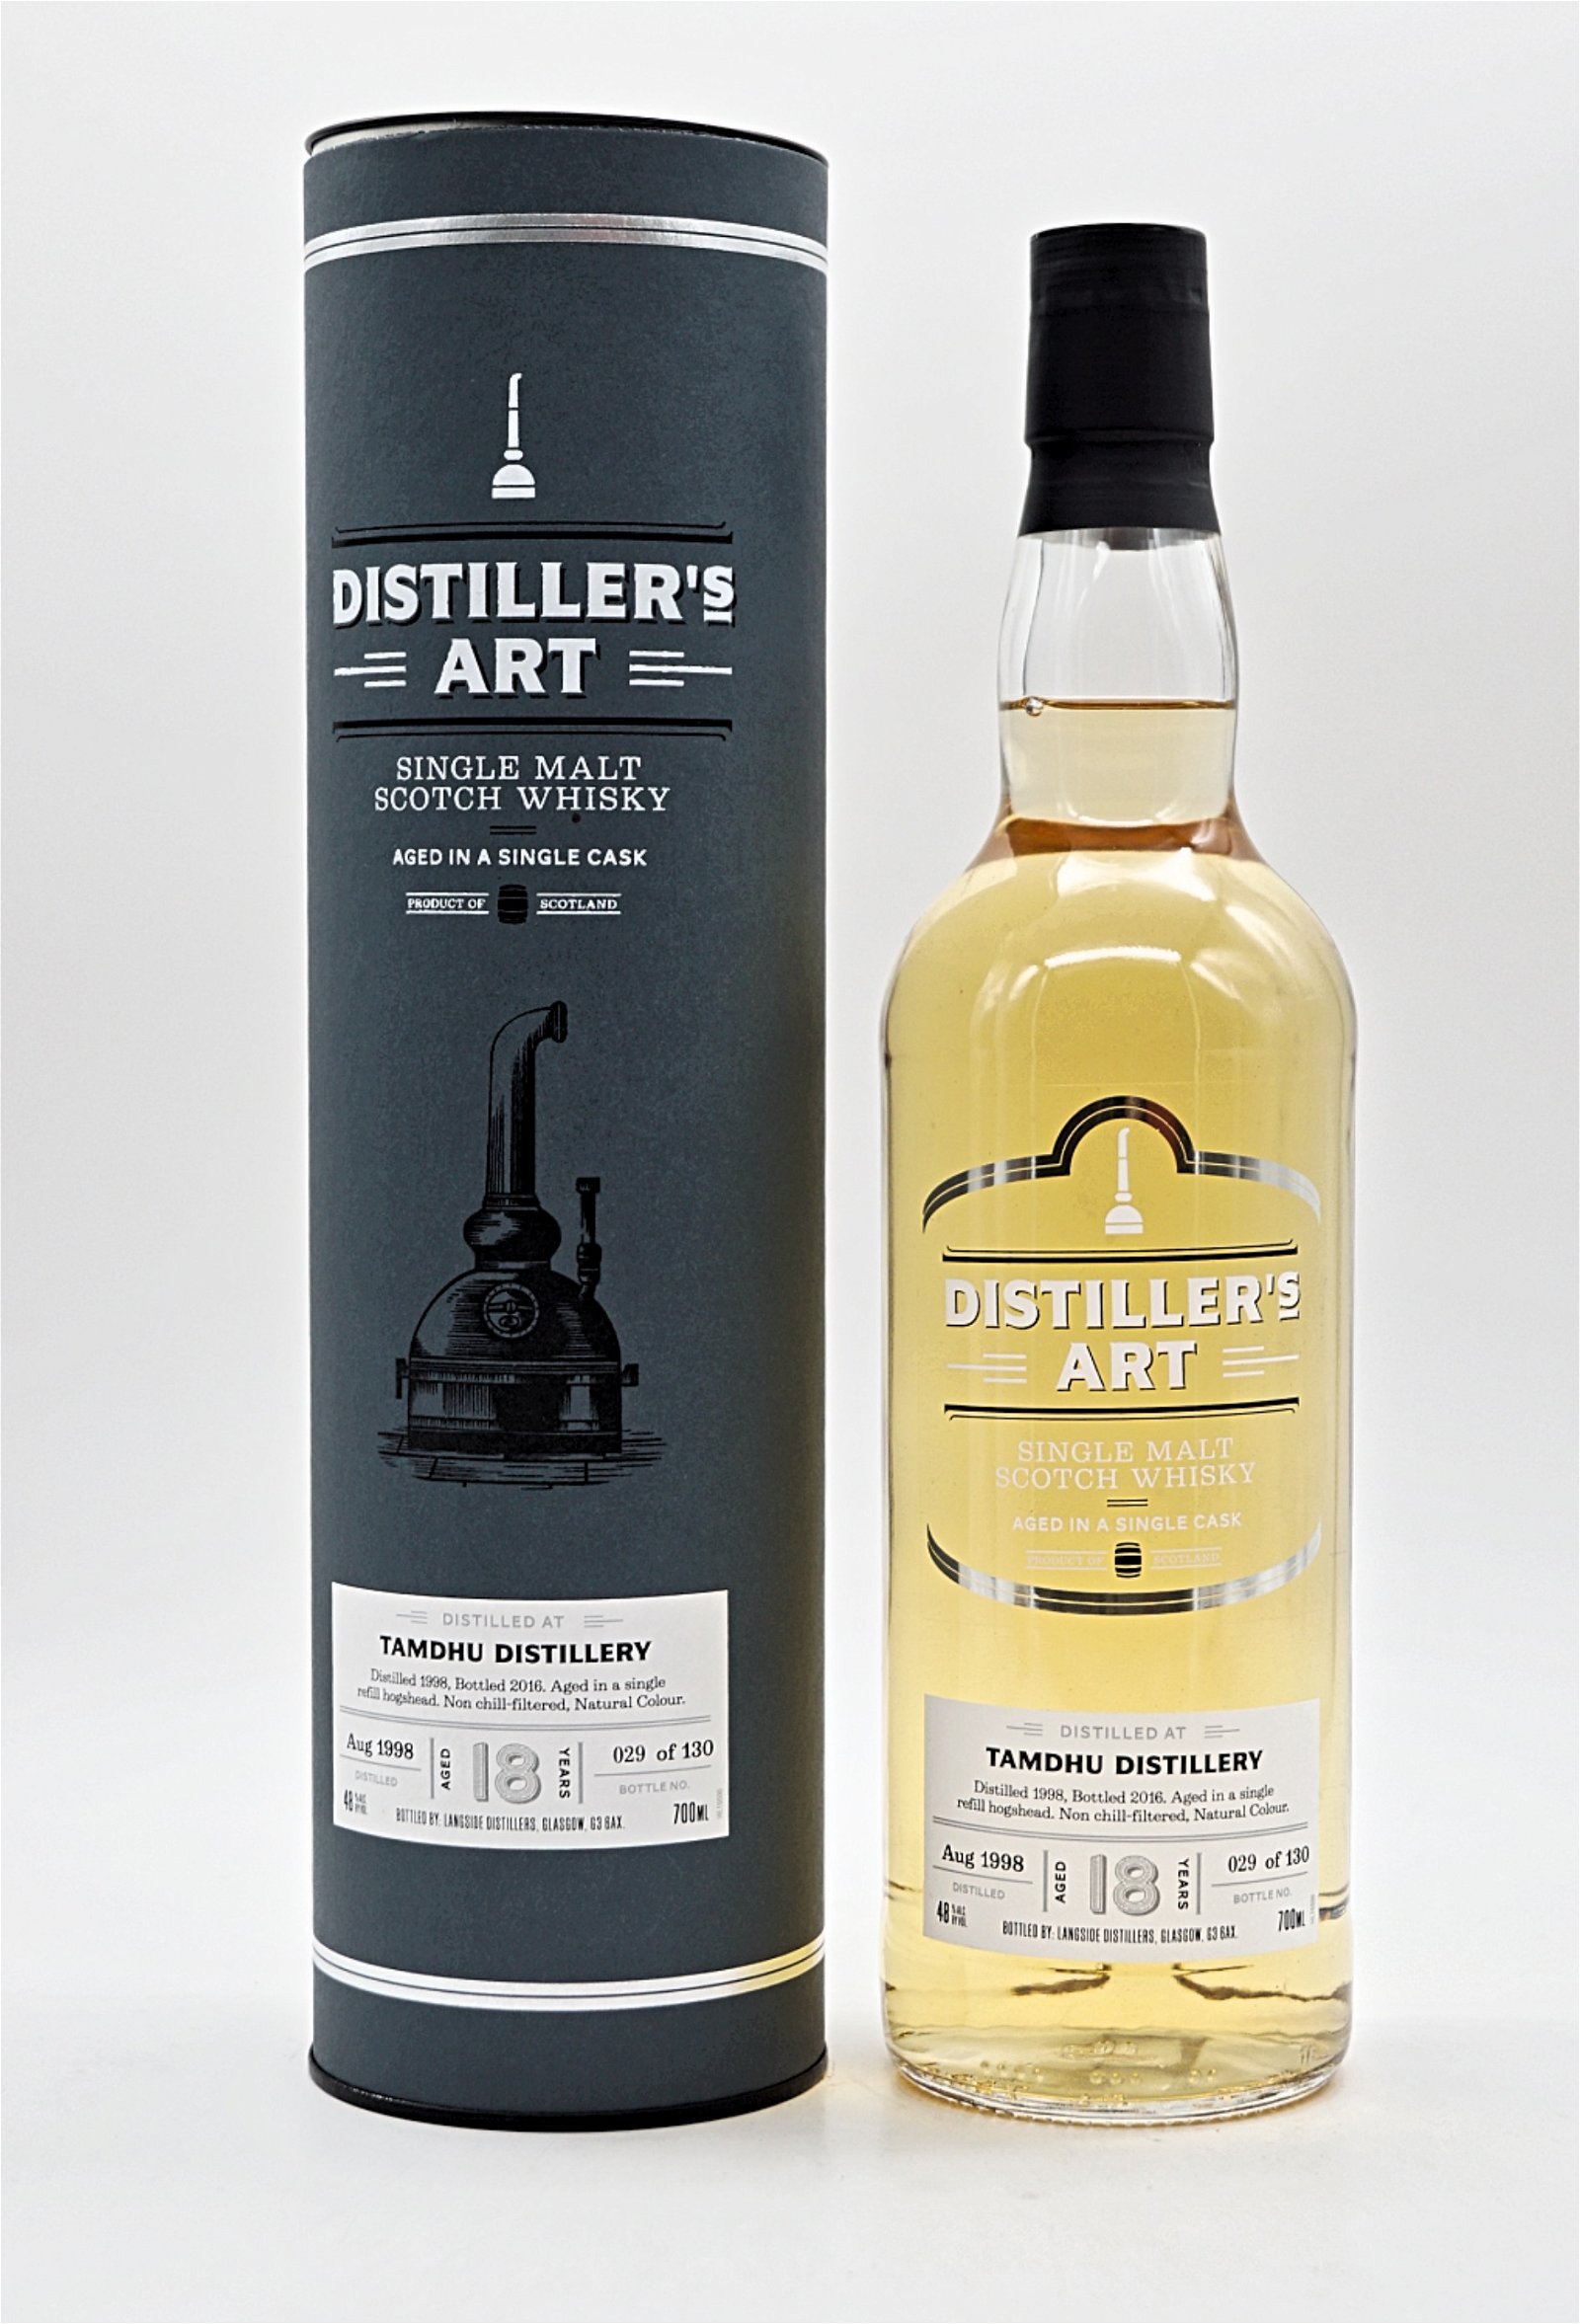 Distillers Art Tamdhu Distillery 18 Jahre 48% 130 Fl. Single Cask Single Malt Scotch Whisky